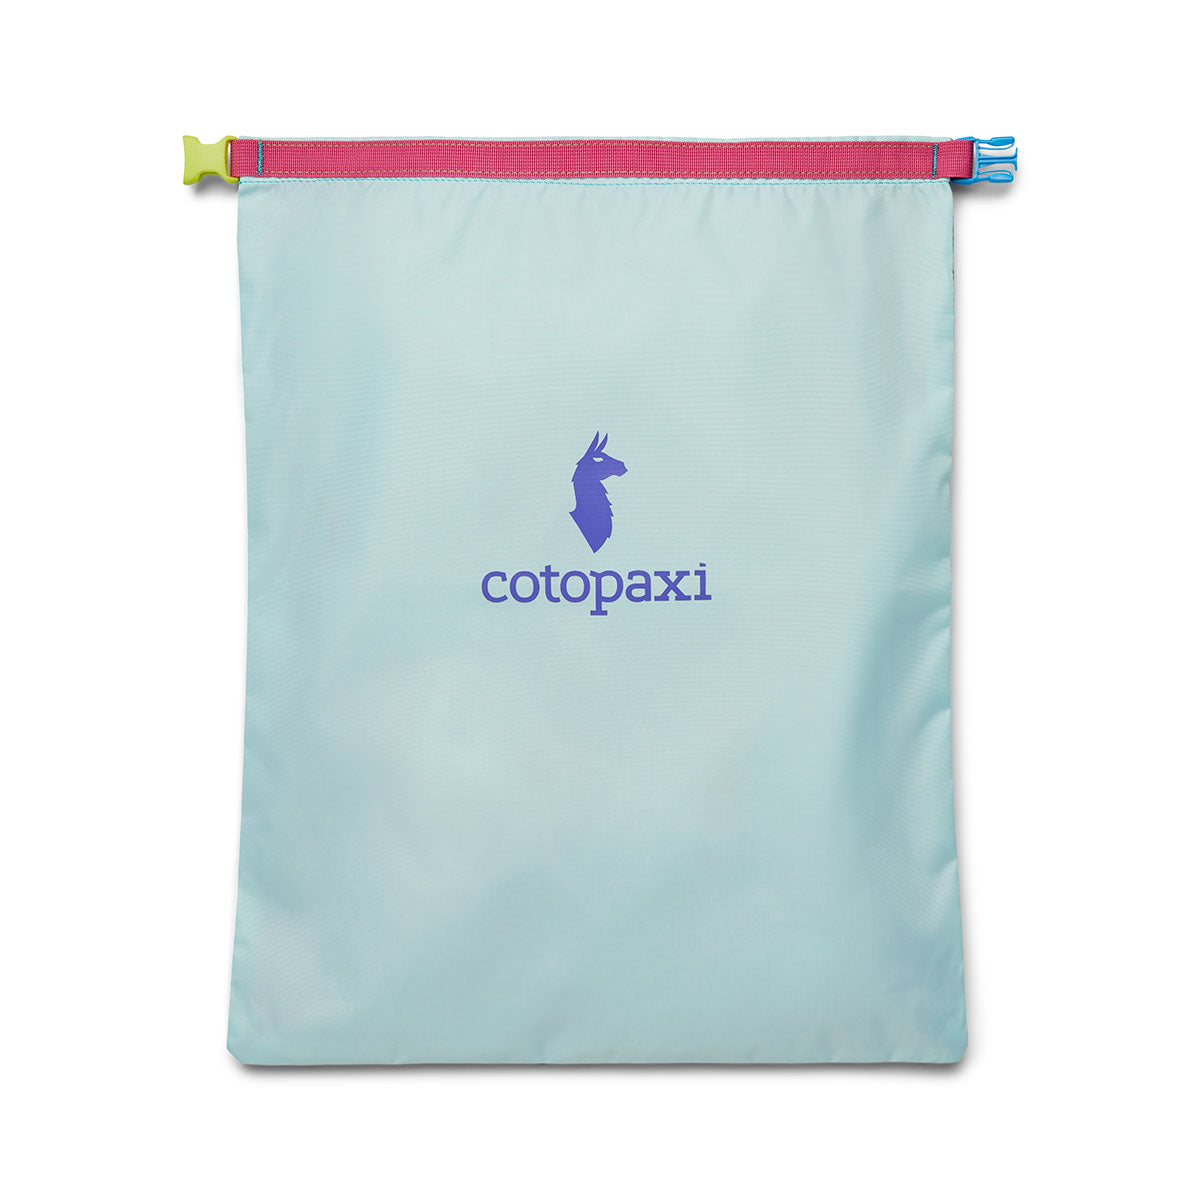 Cotopaxi Laundry Bag コトパクシ ランドリーバッグ デルディア